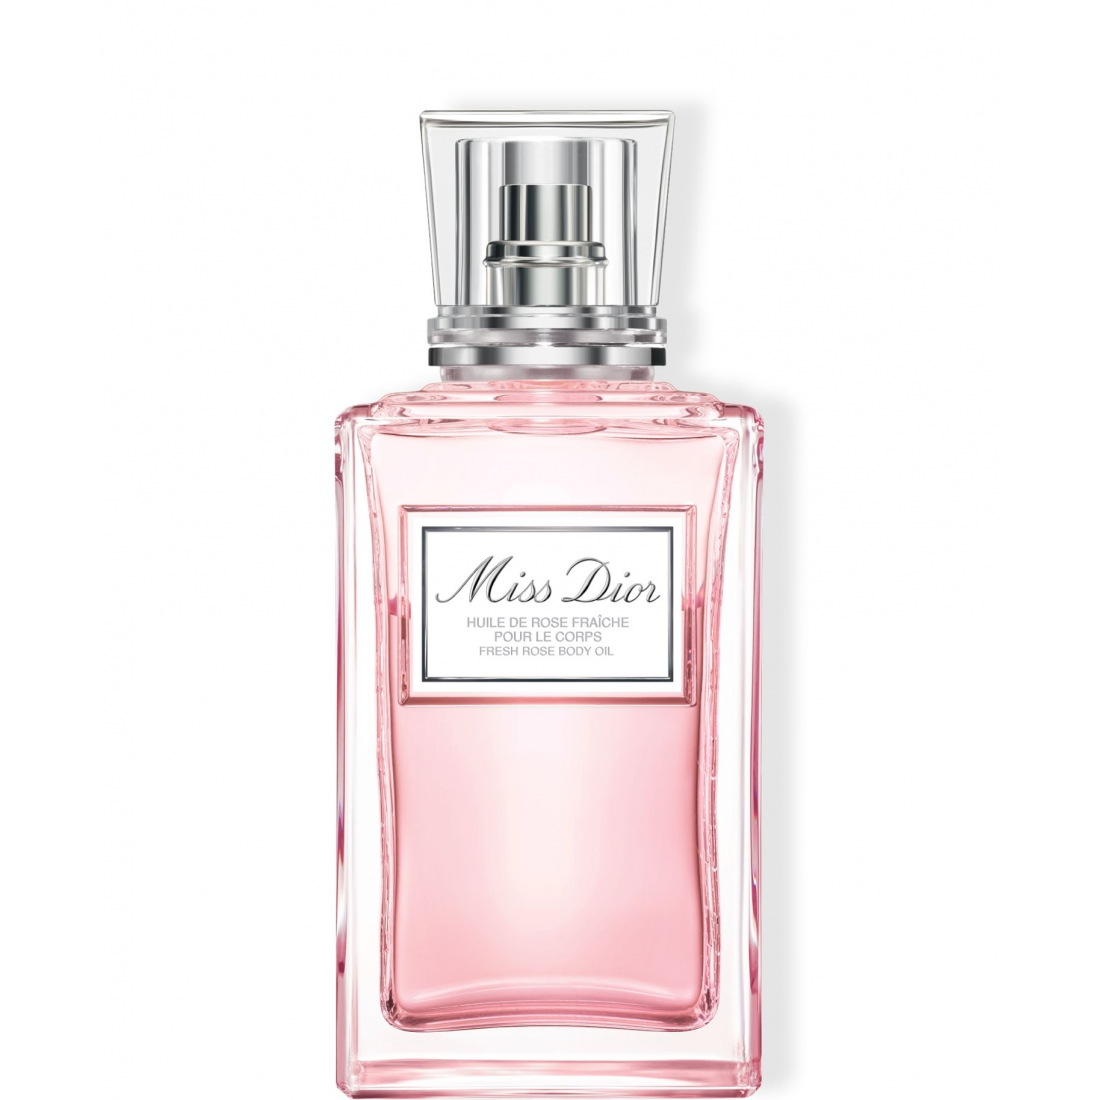 'Miss Dior' Body Oil - 100 ml